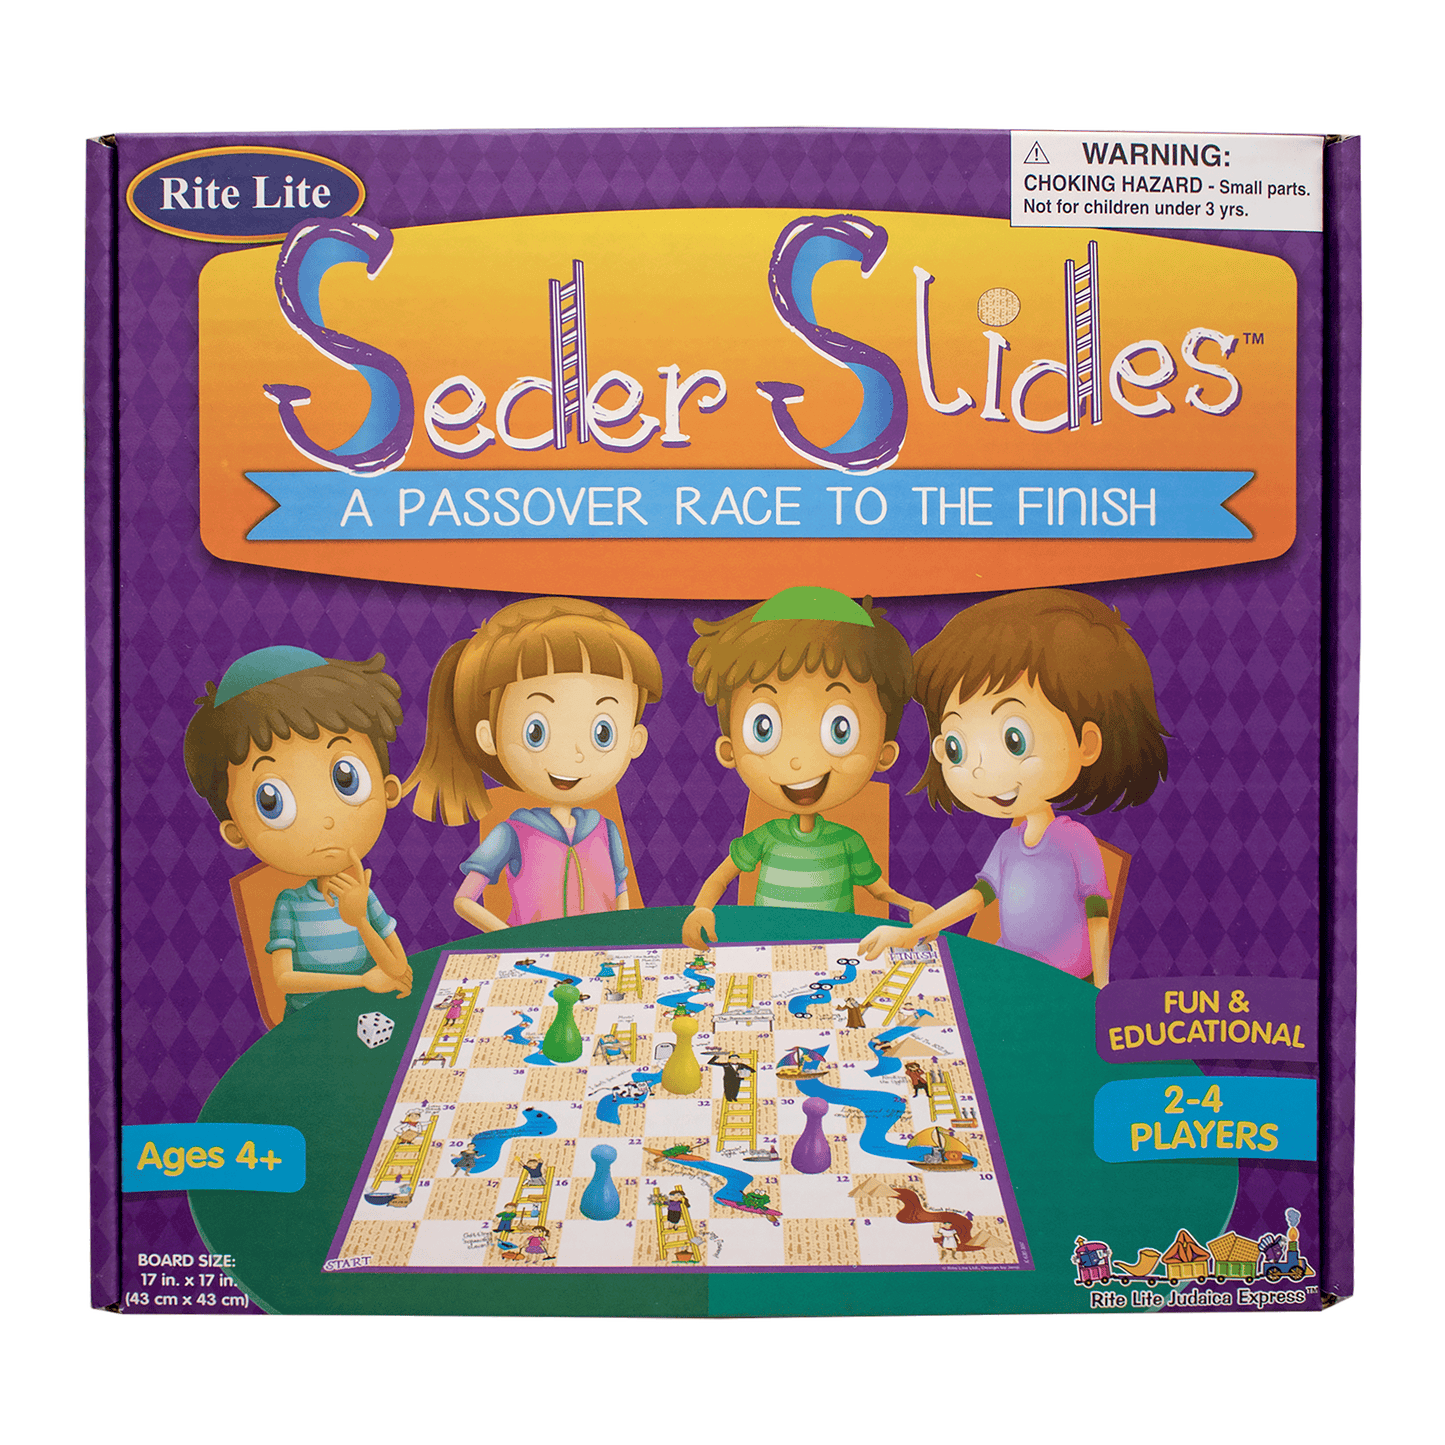 Seder Slides Passover Game